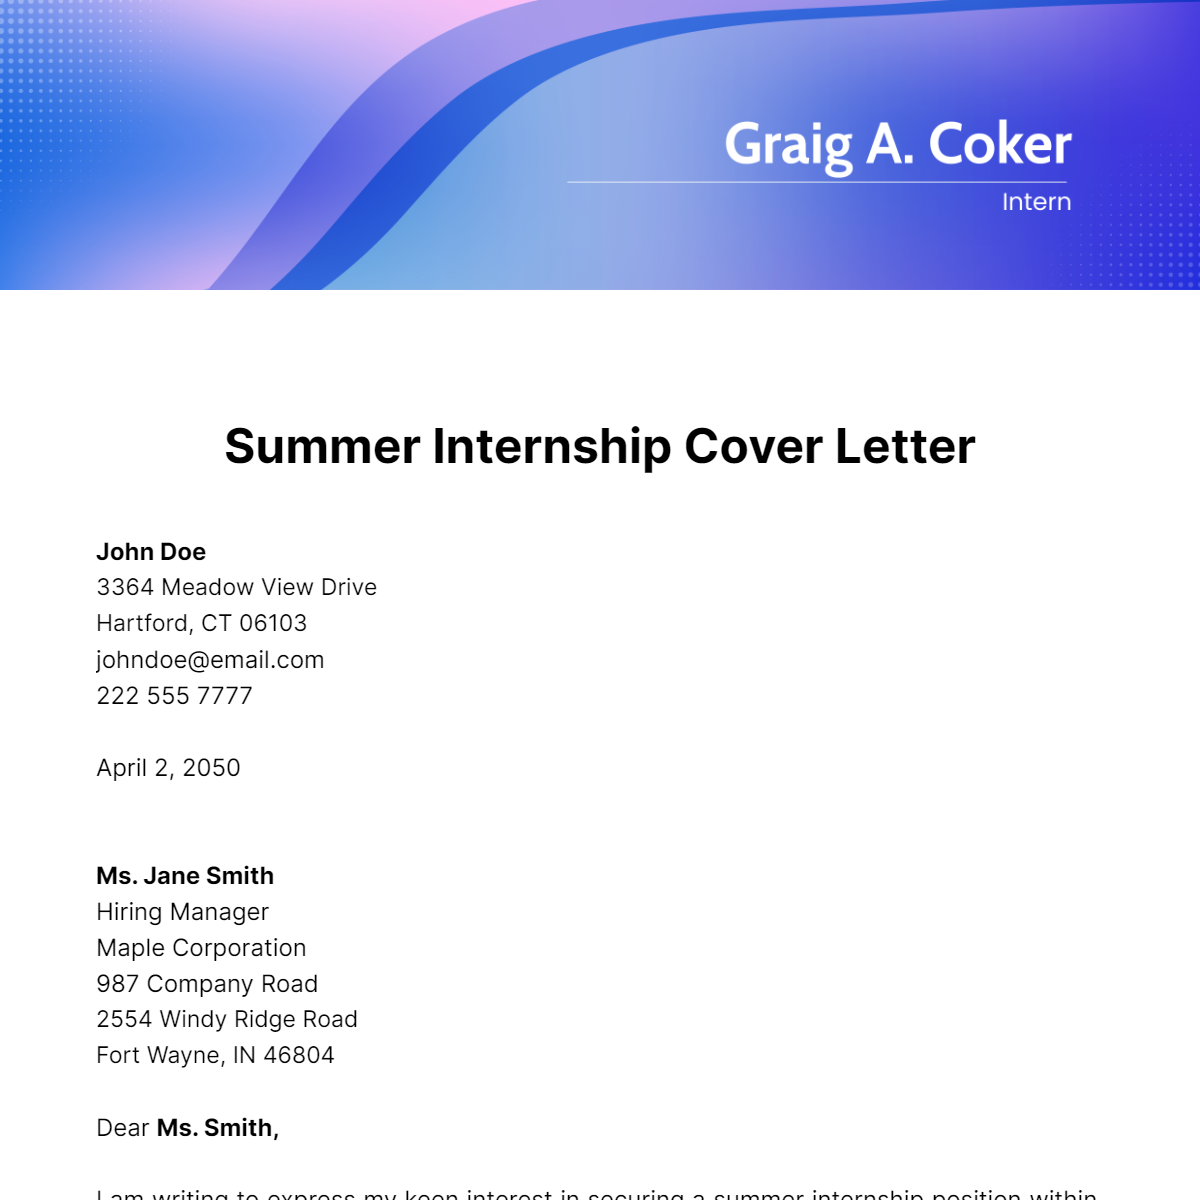 Summer Internship Cover Letter Template